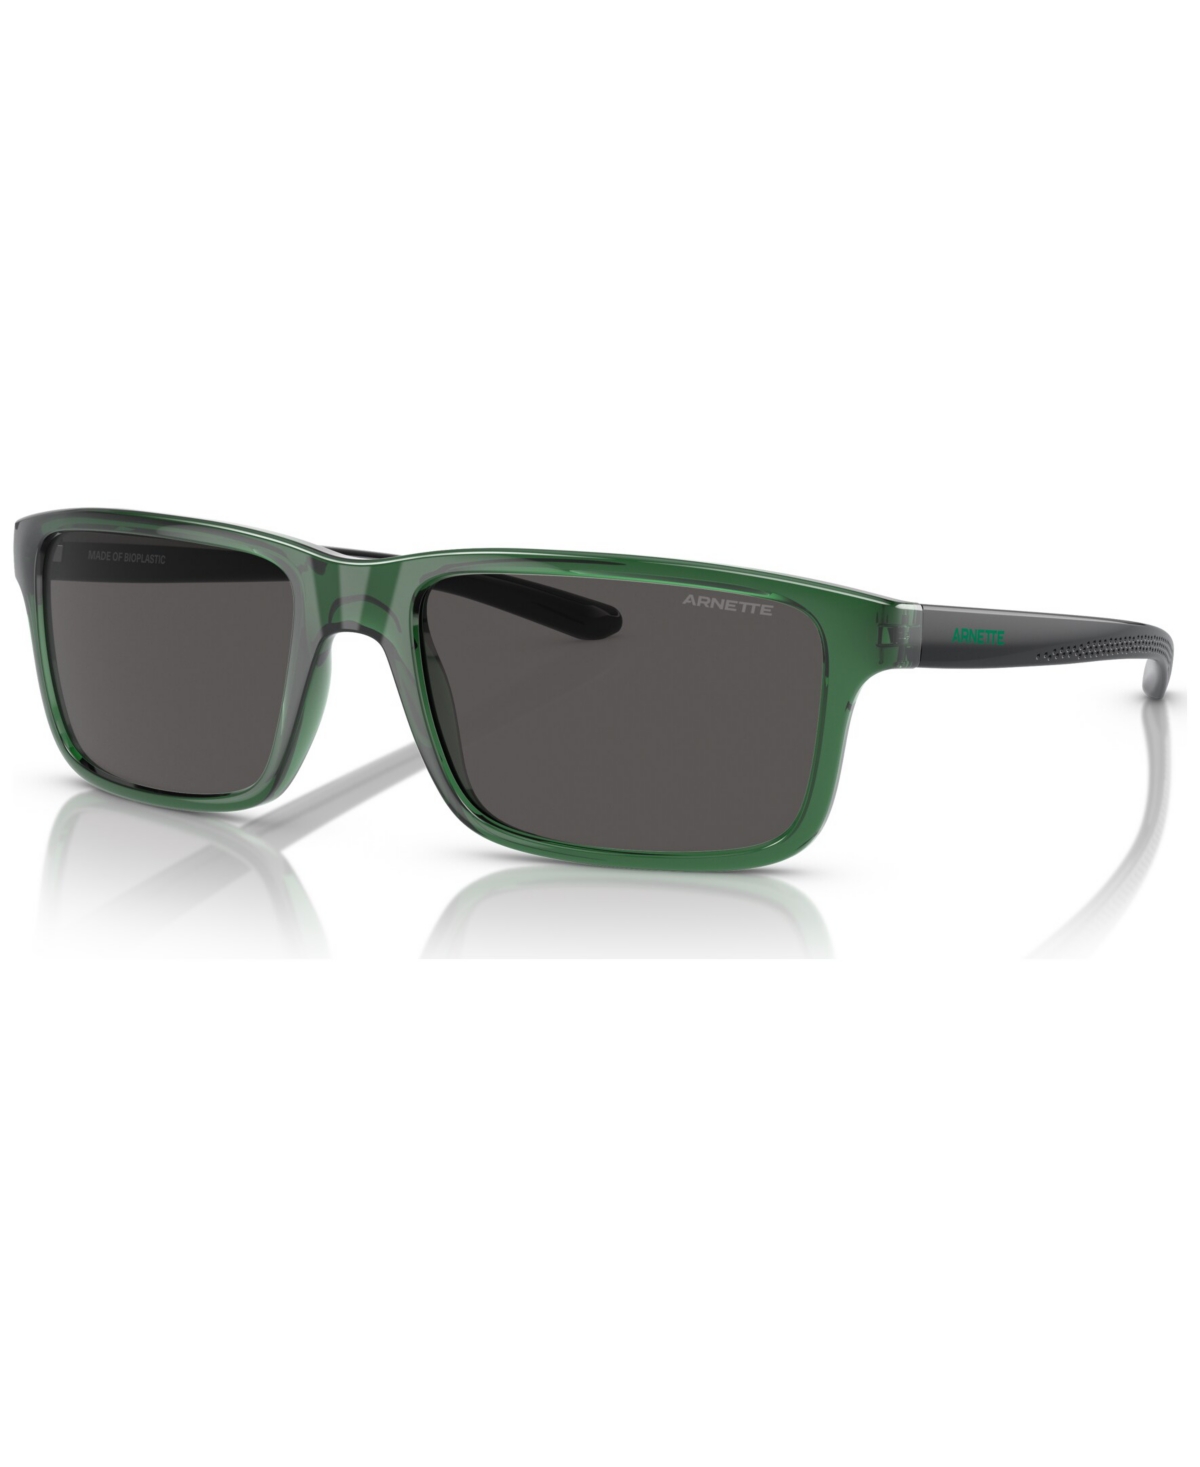 Men's Sunglasses, Mwamba - Green